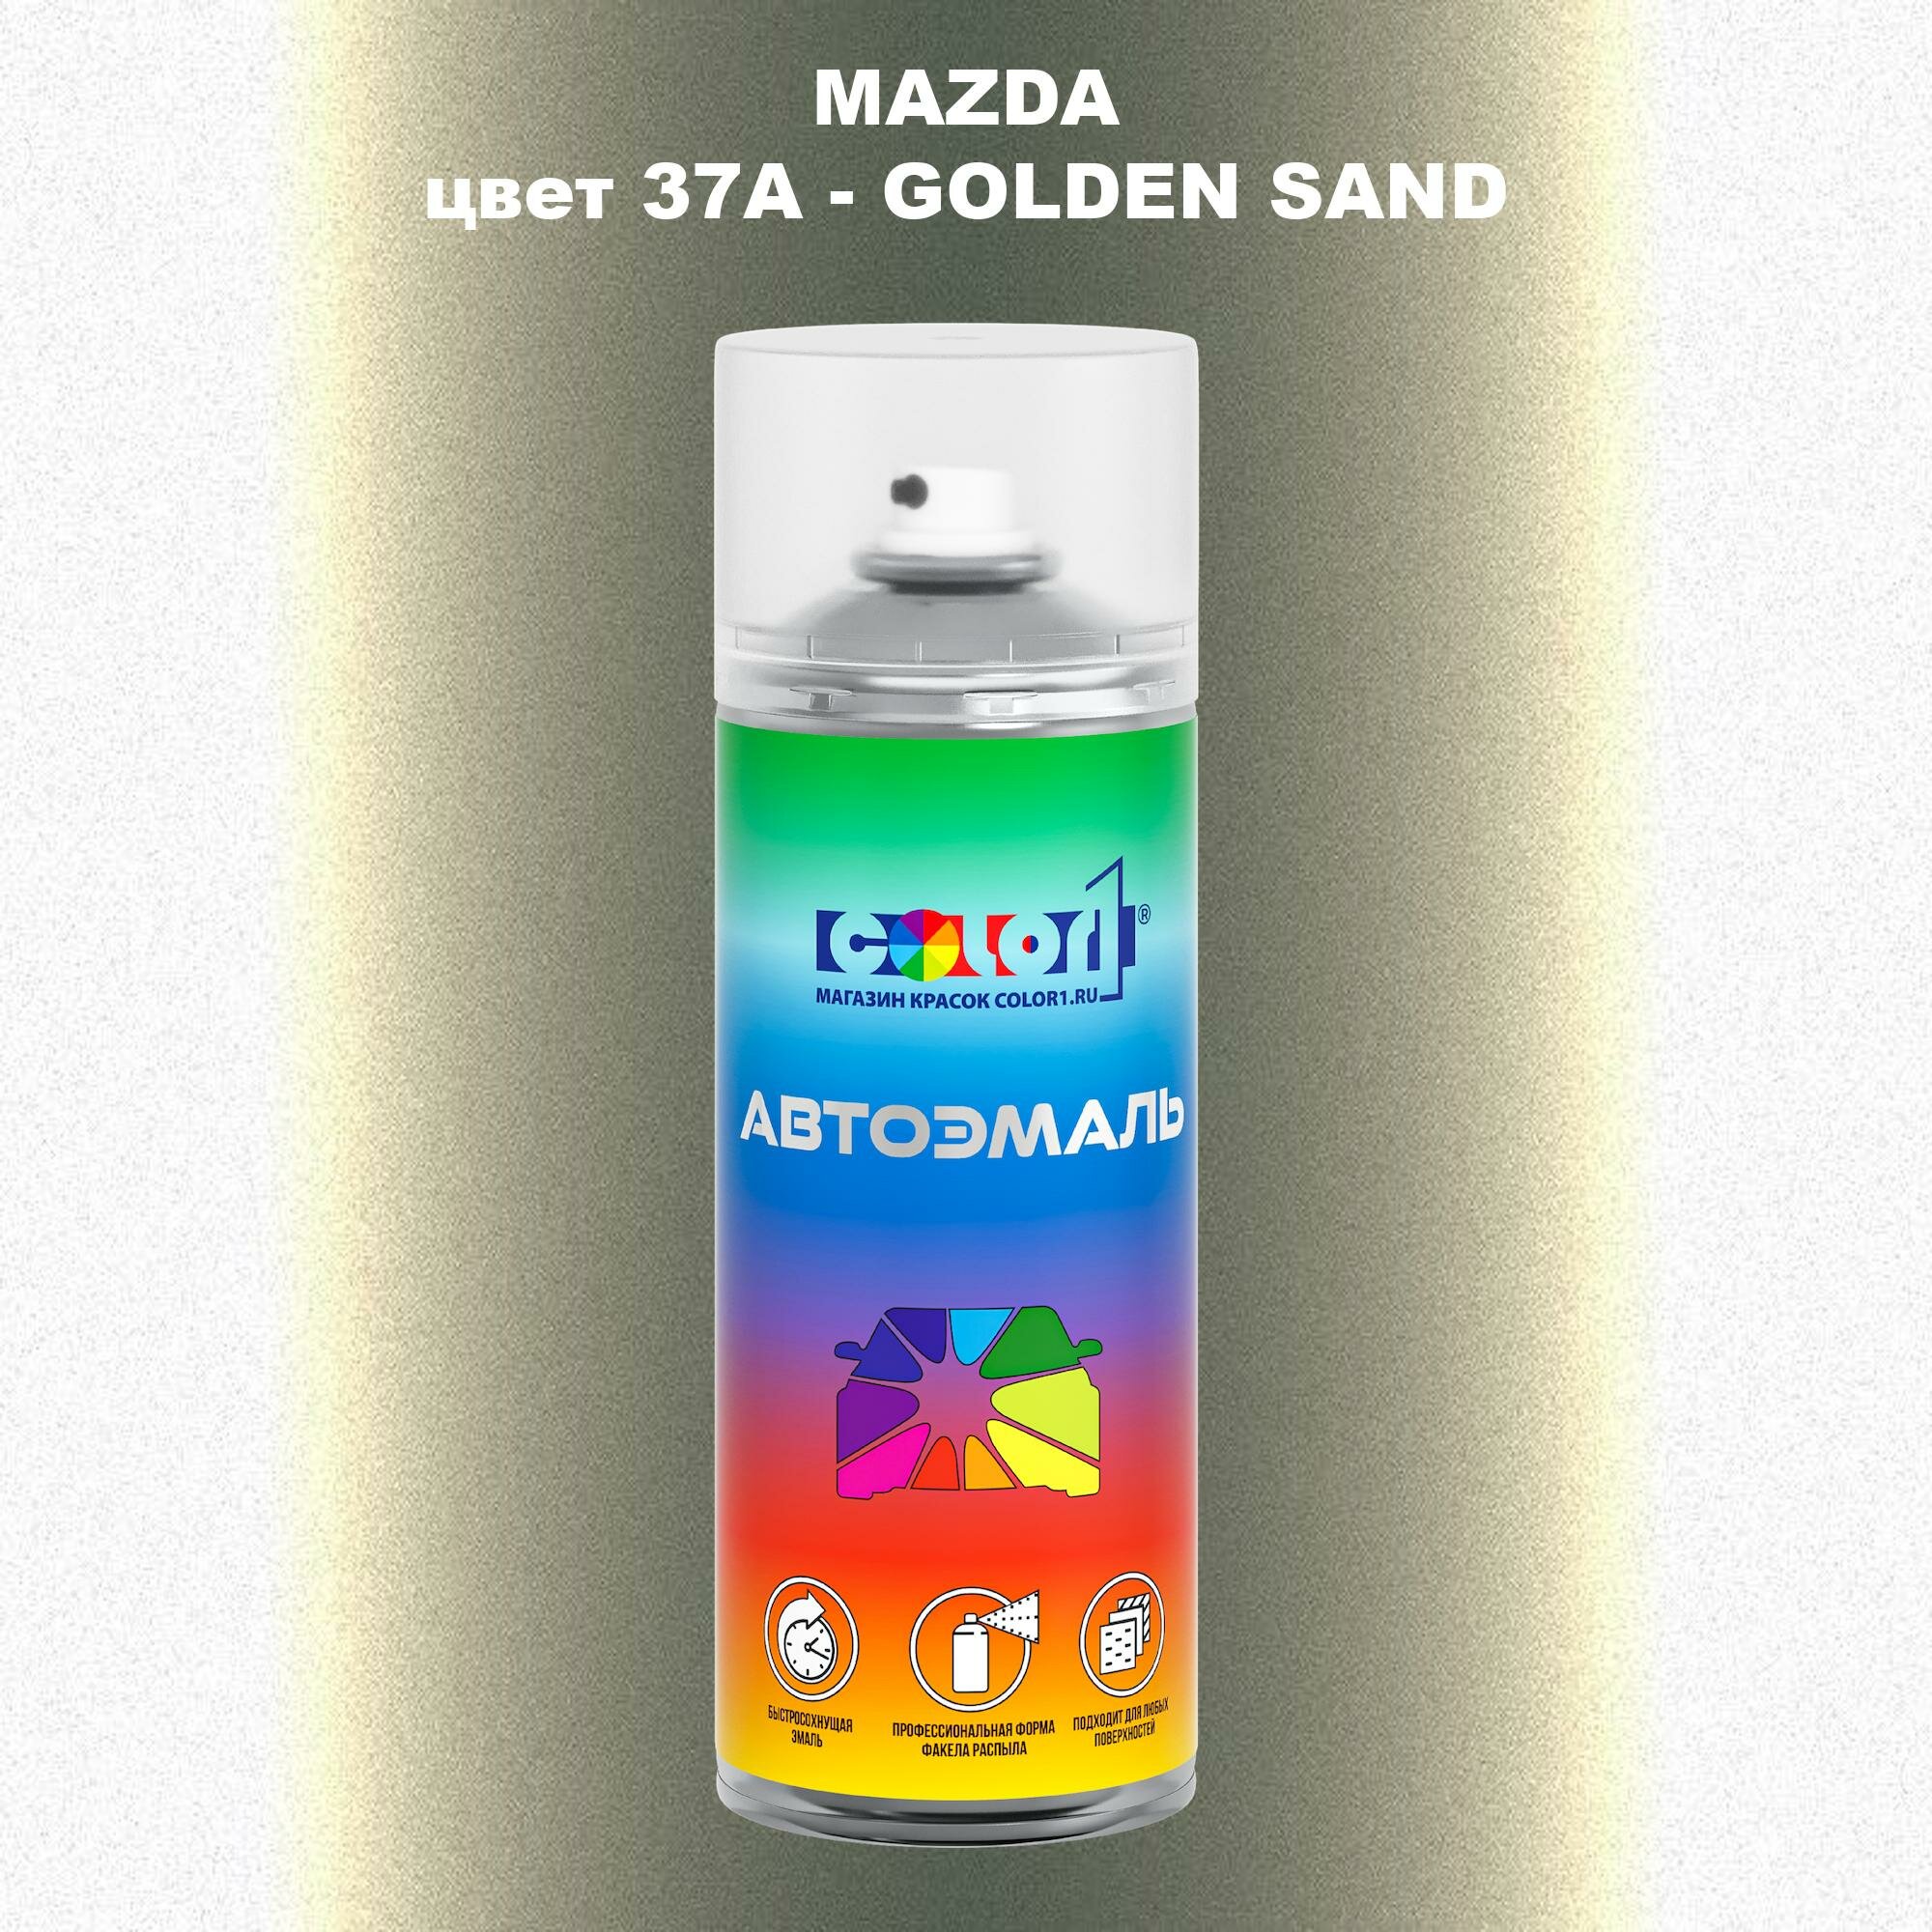 Аэрозольная краска COLOR1 для MAZDA, цвет 37A - GOLDEN SAND